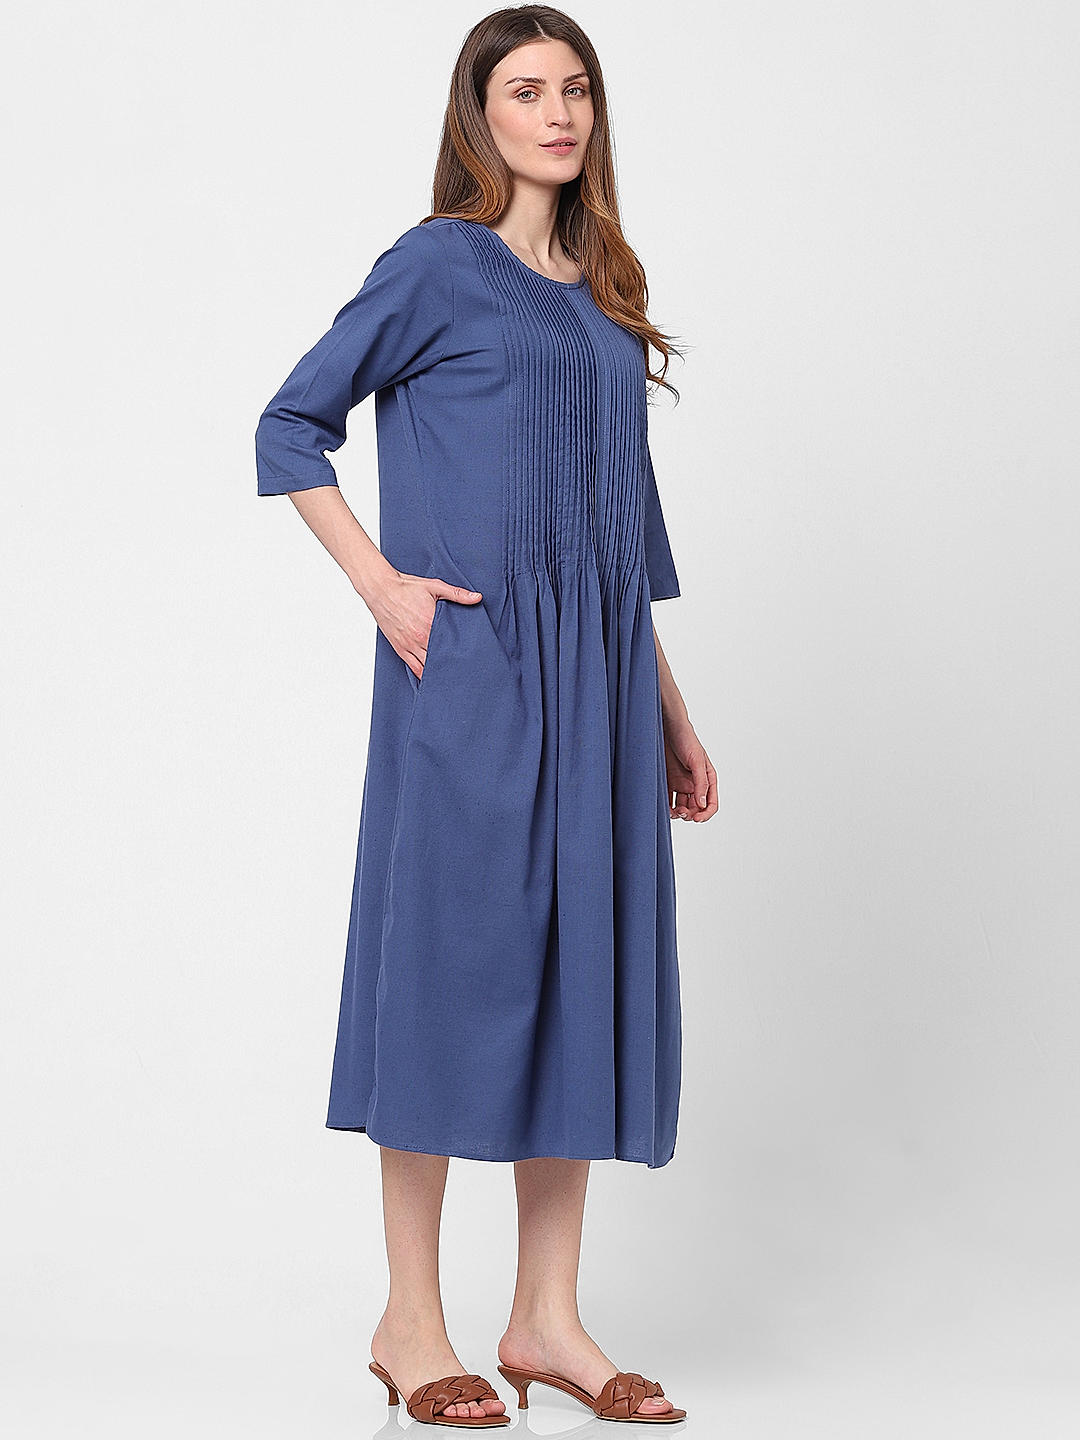 INDIFUSION Blue Pleated Tunic Dress